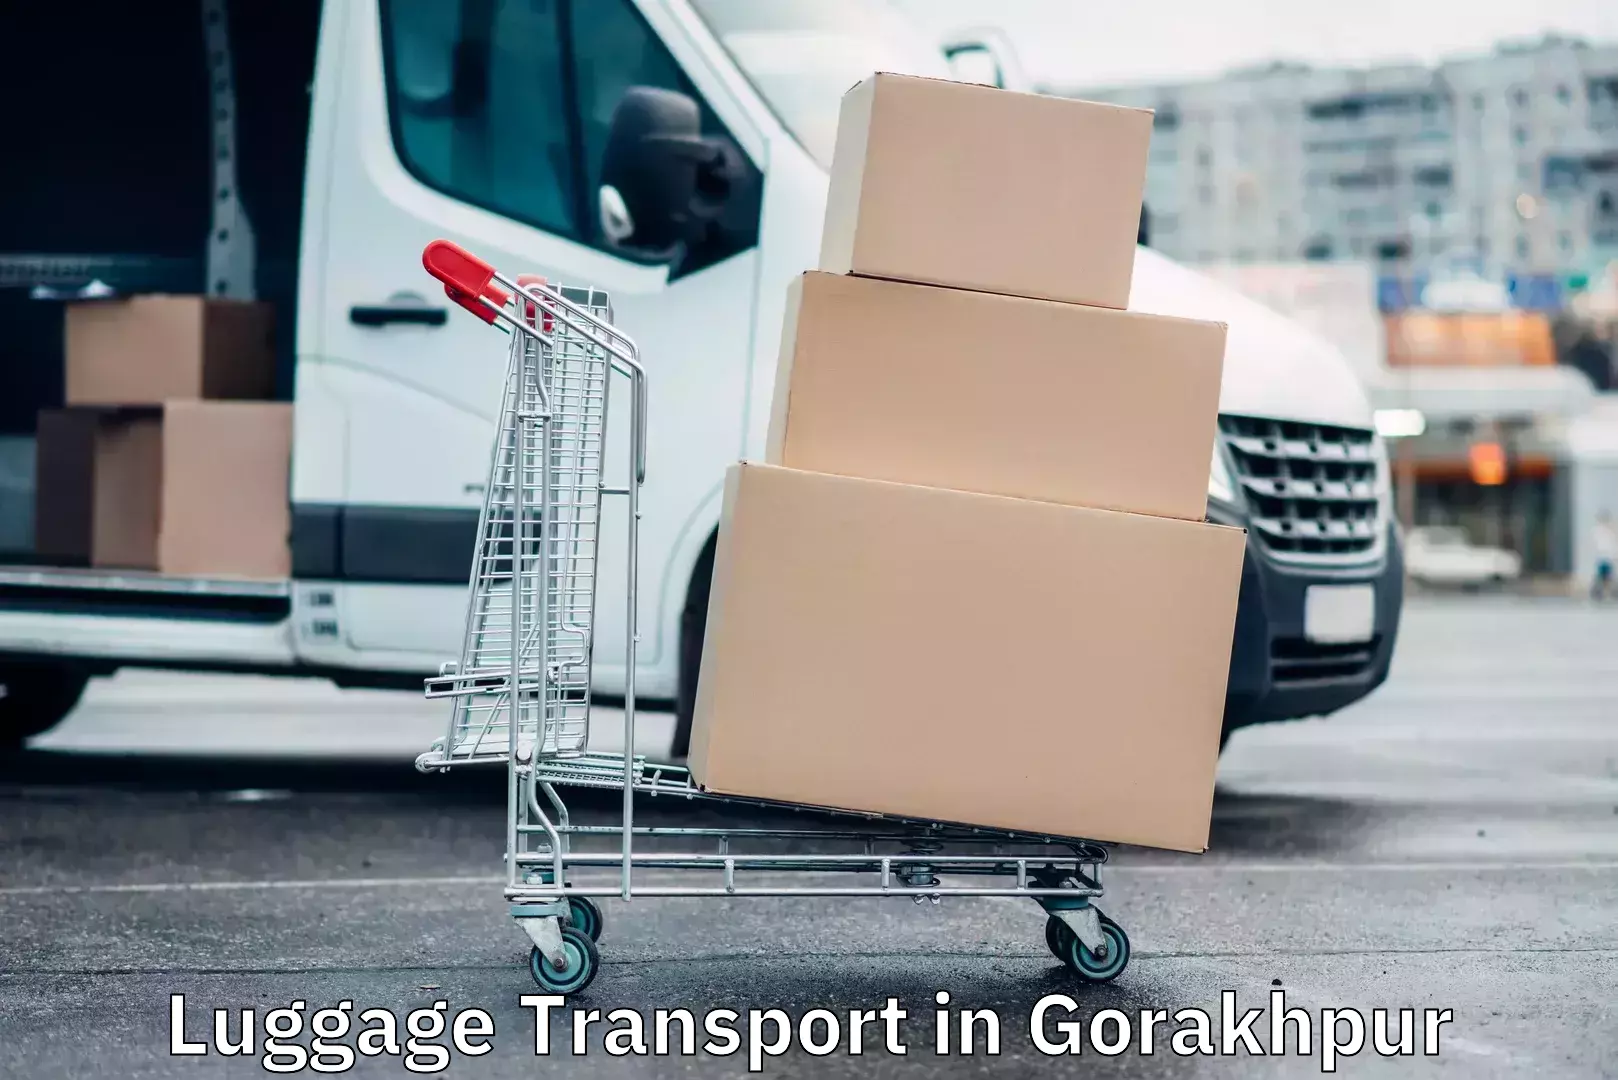 Holiday season luggage delivery in Gorakhpur